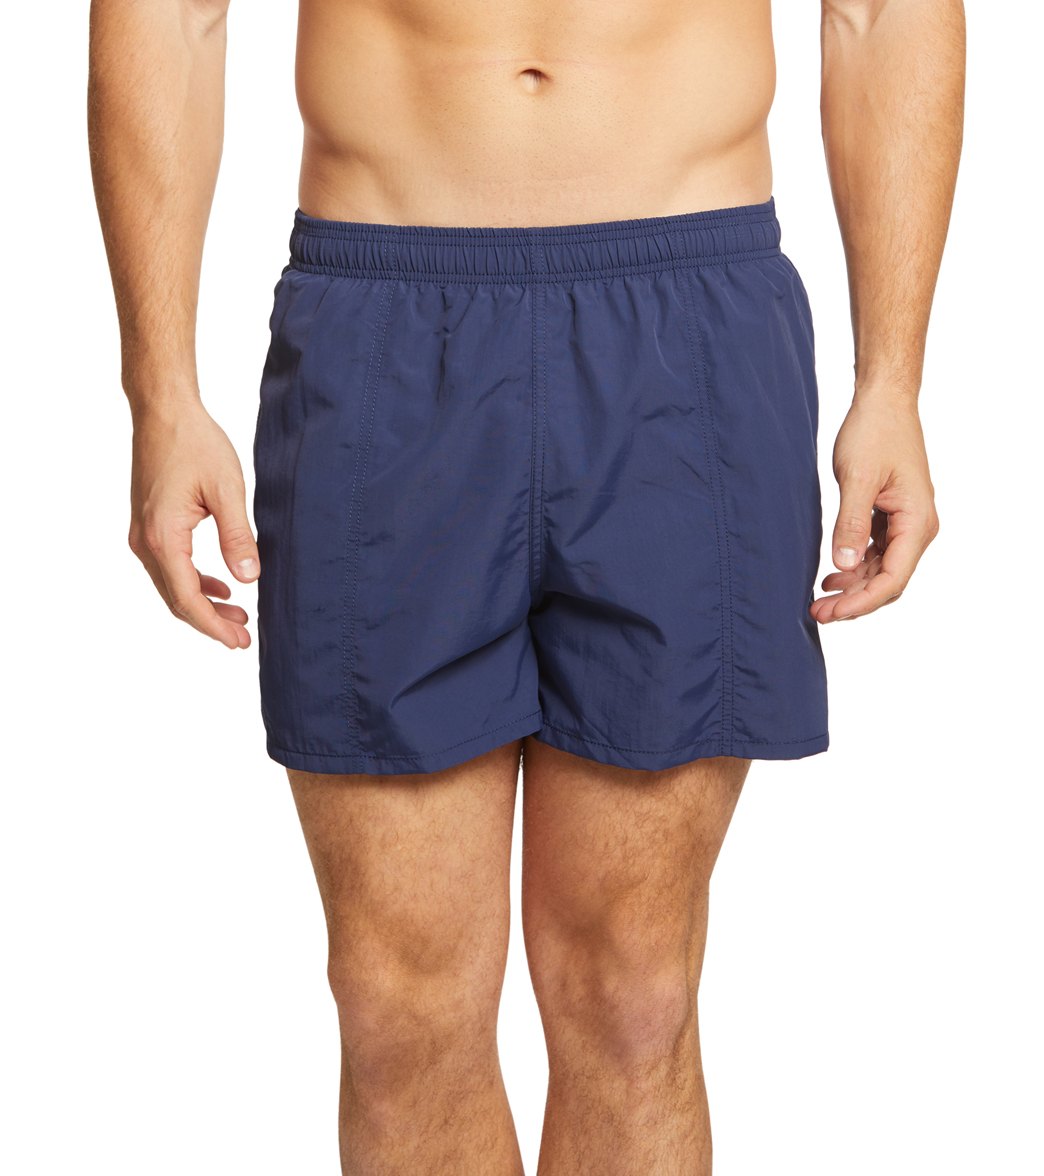 Men's Jersey Knit Activewear Long Jam Drawstring Shorts 3 Pocket Electric Blue